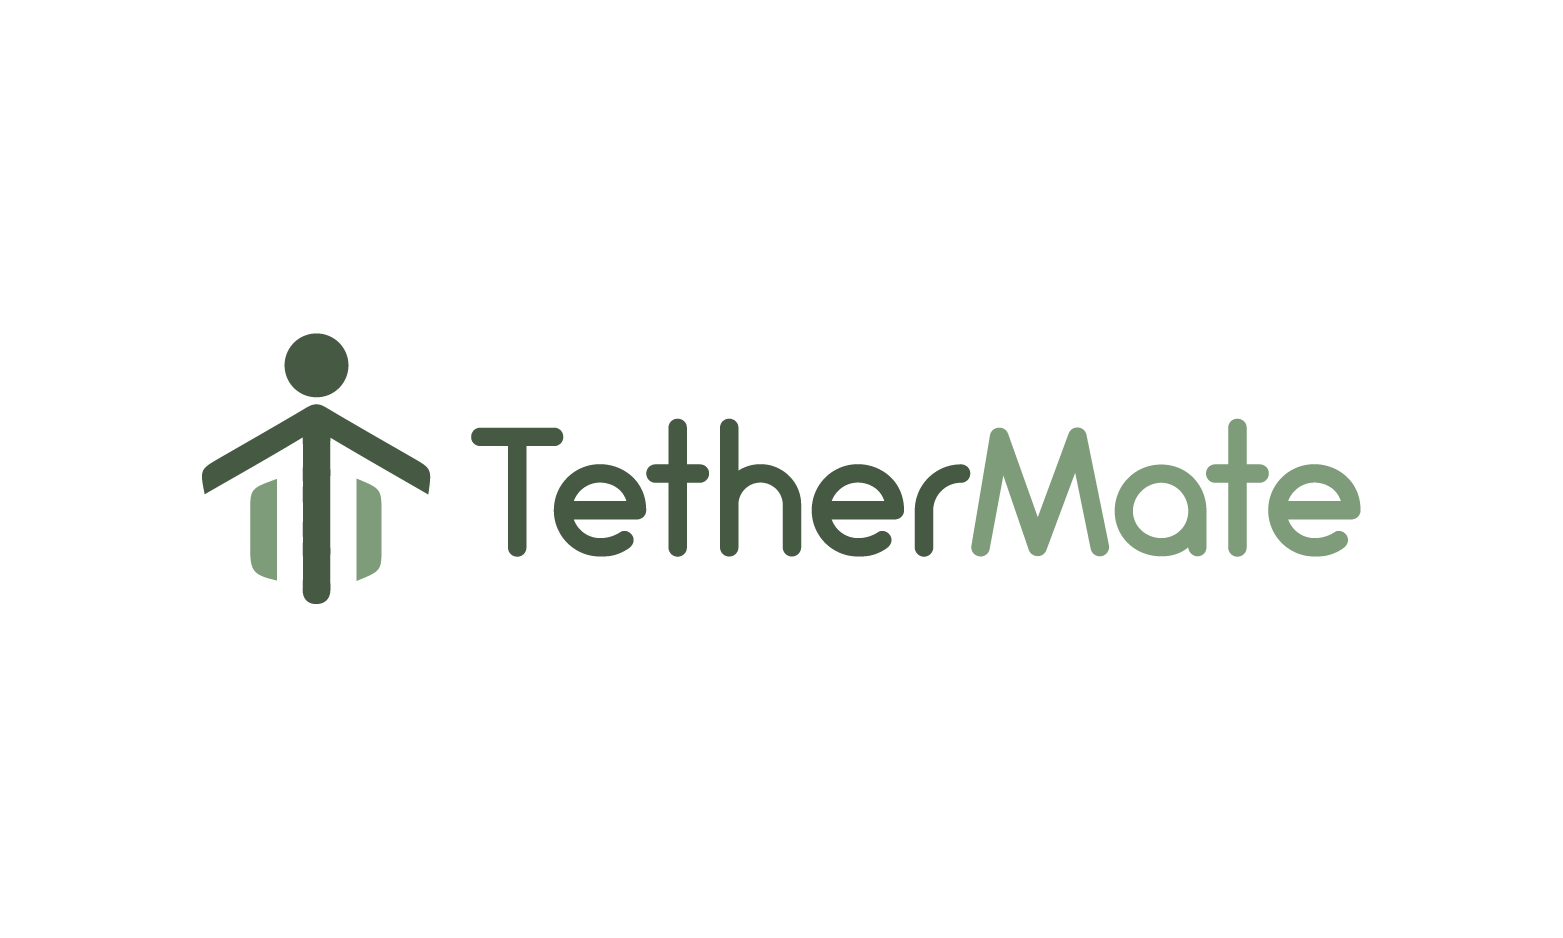 TetherMate.com - Creative brandable domain for sale